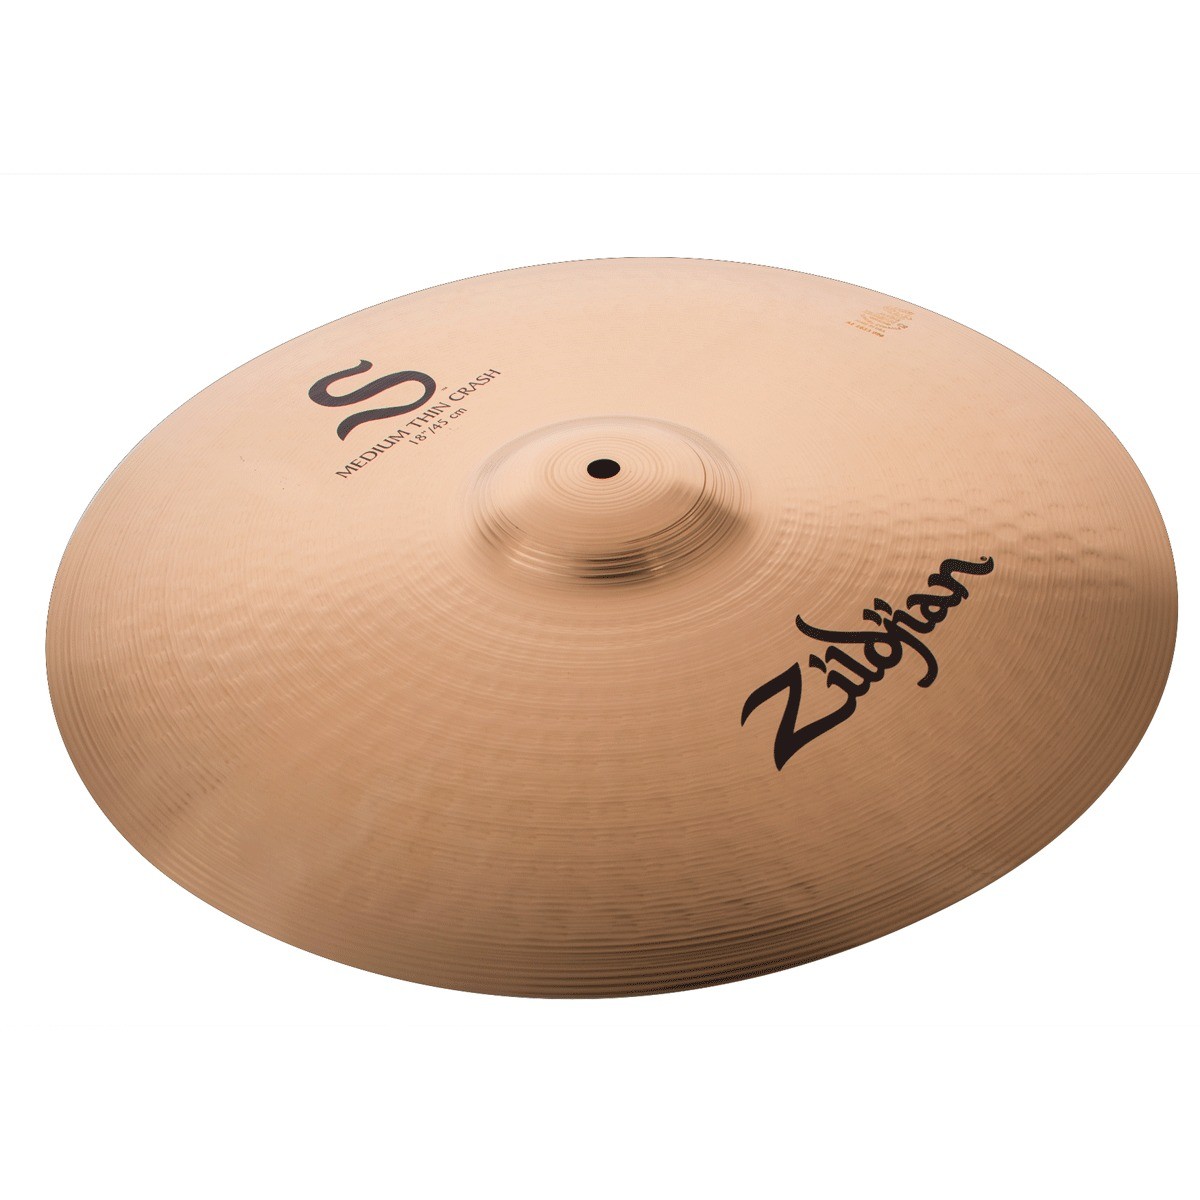 zildjian s performer cymbal set review